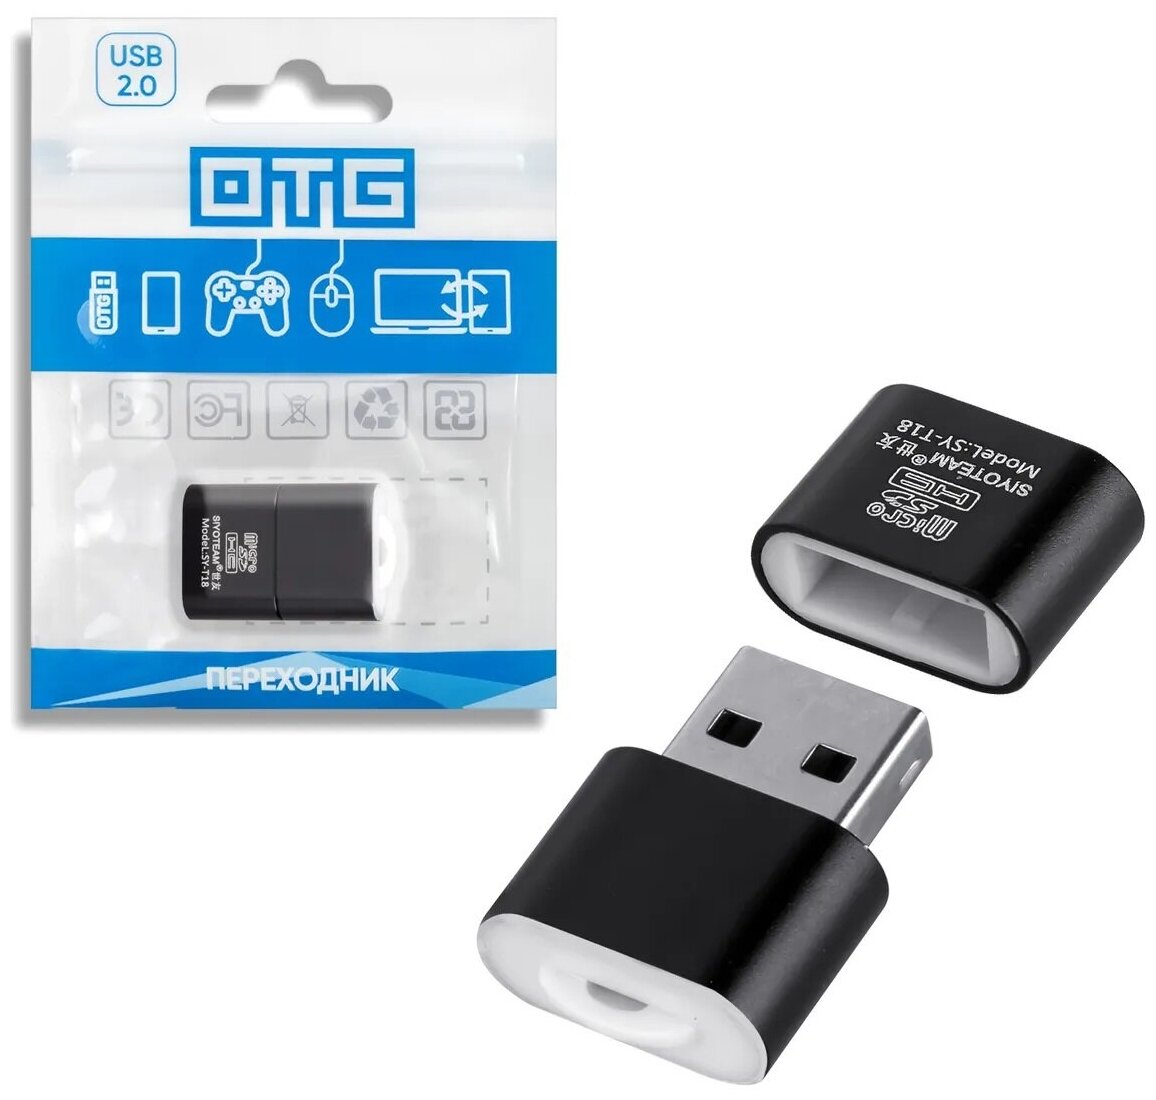 Картридер USB для карт Micro SD CR 01 / Устройство юсб для чтения карт памяти микро сд черный